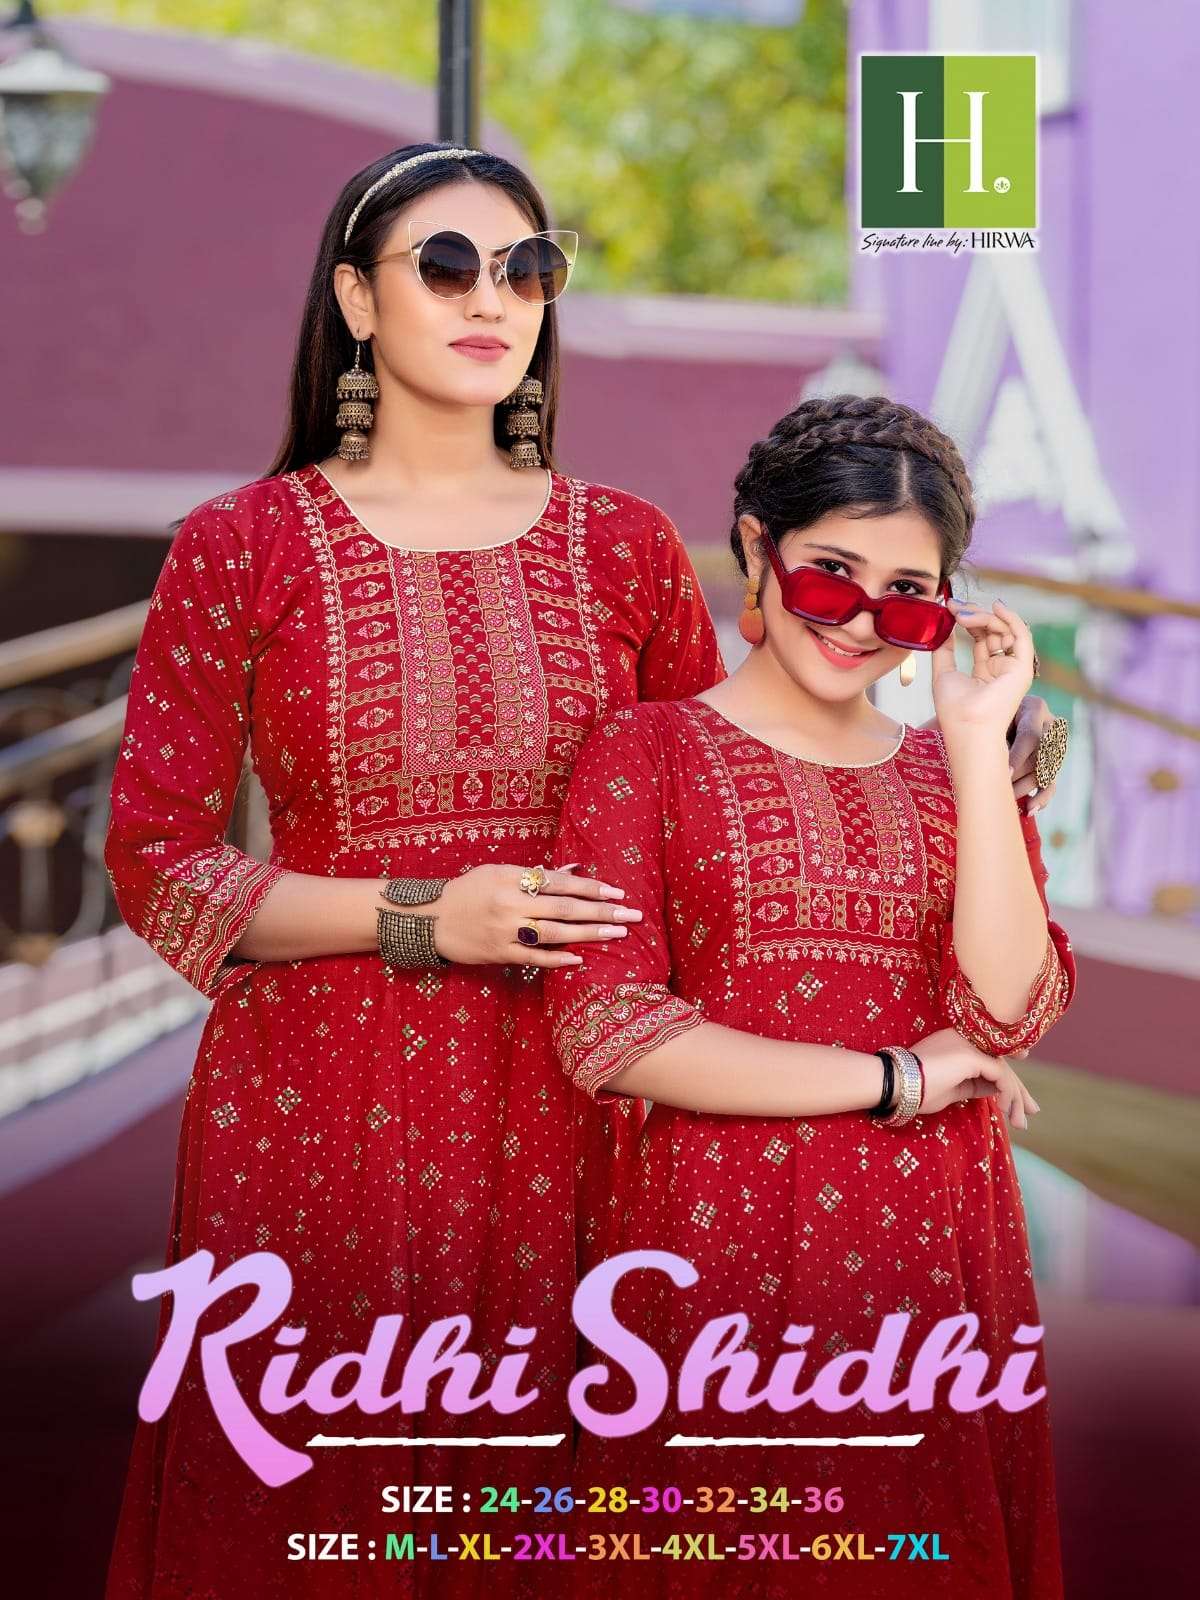 hirwa present ridhi shidhi fancy festive wear mother & daughter combo set anarkali kurtis 